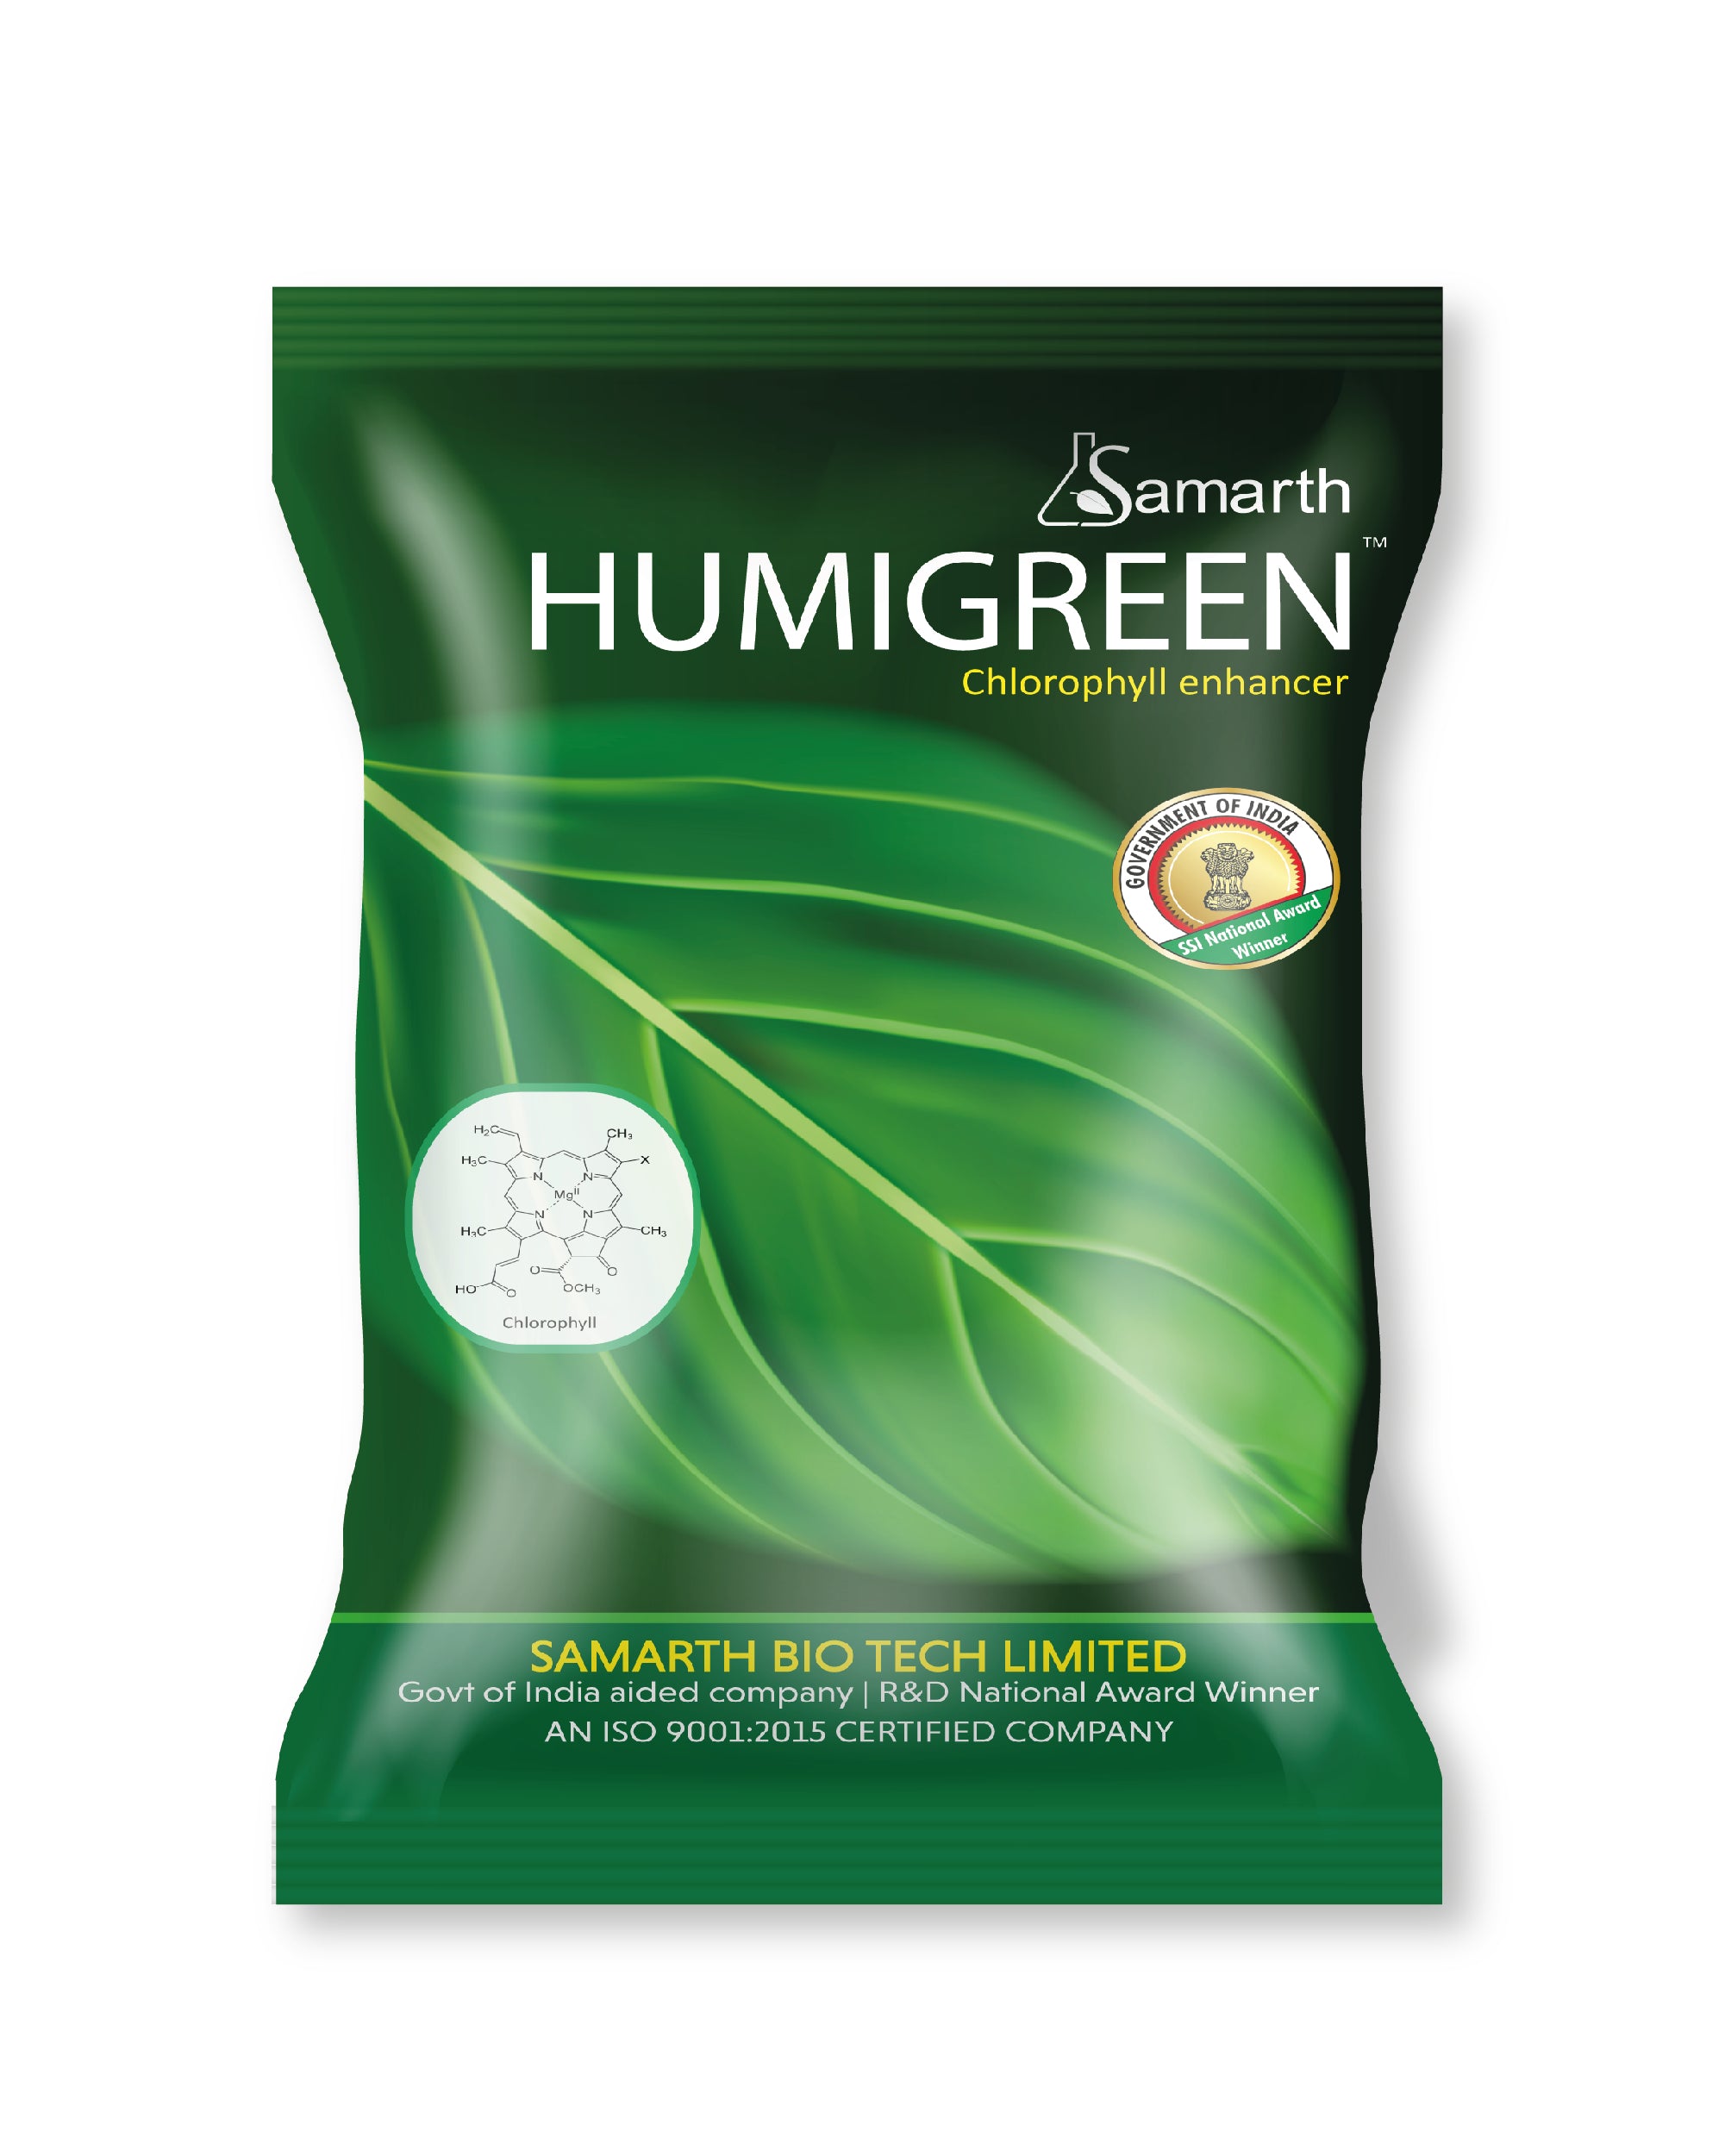 SAMRATH HUMIGREEN product  Image